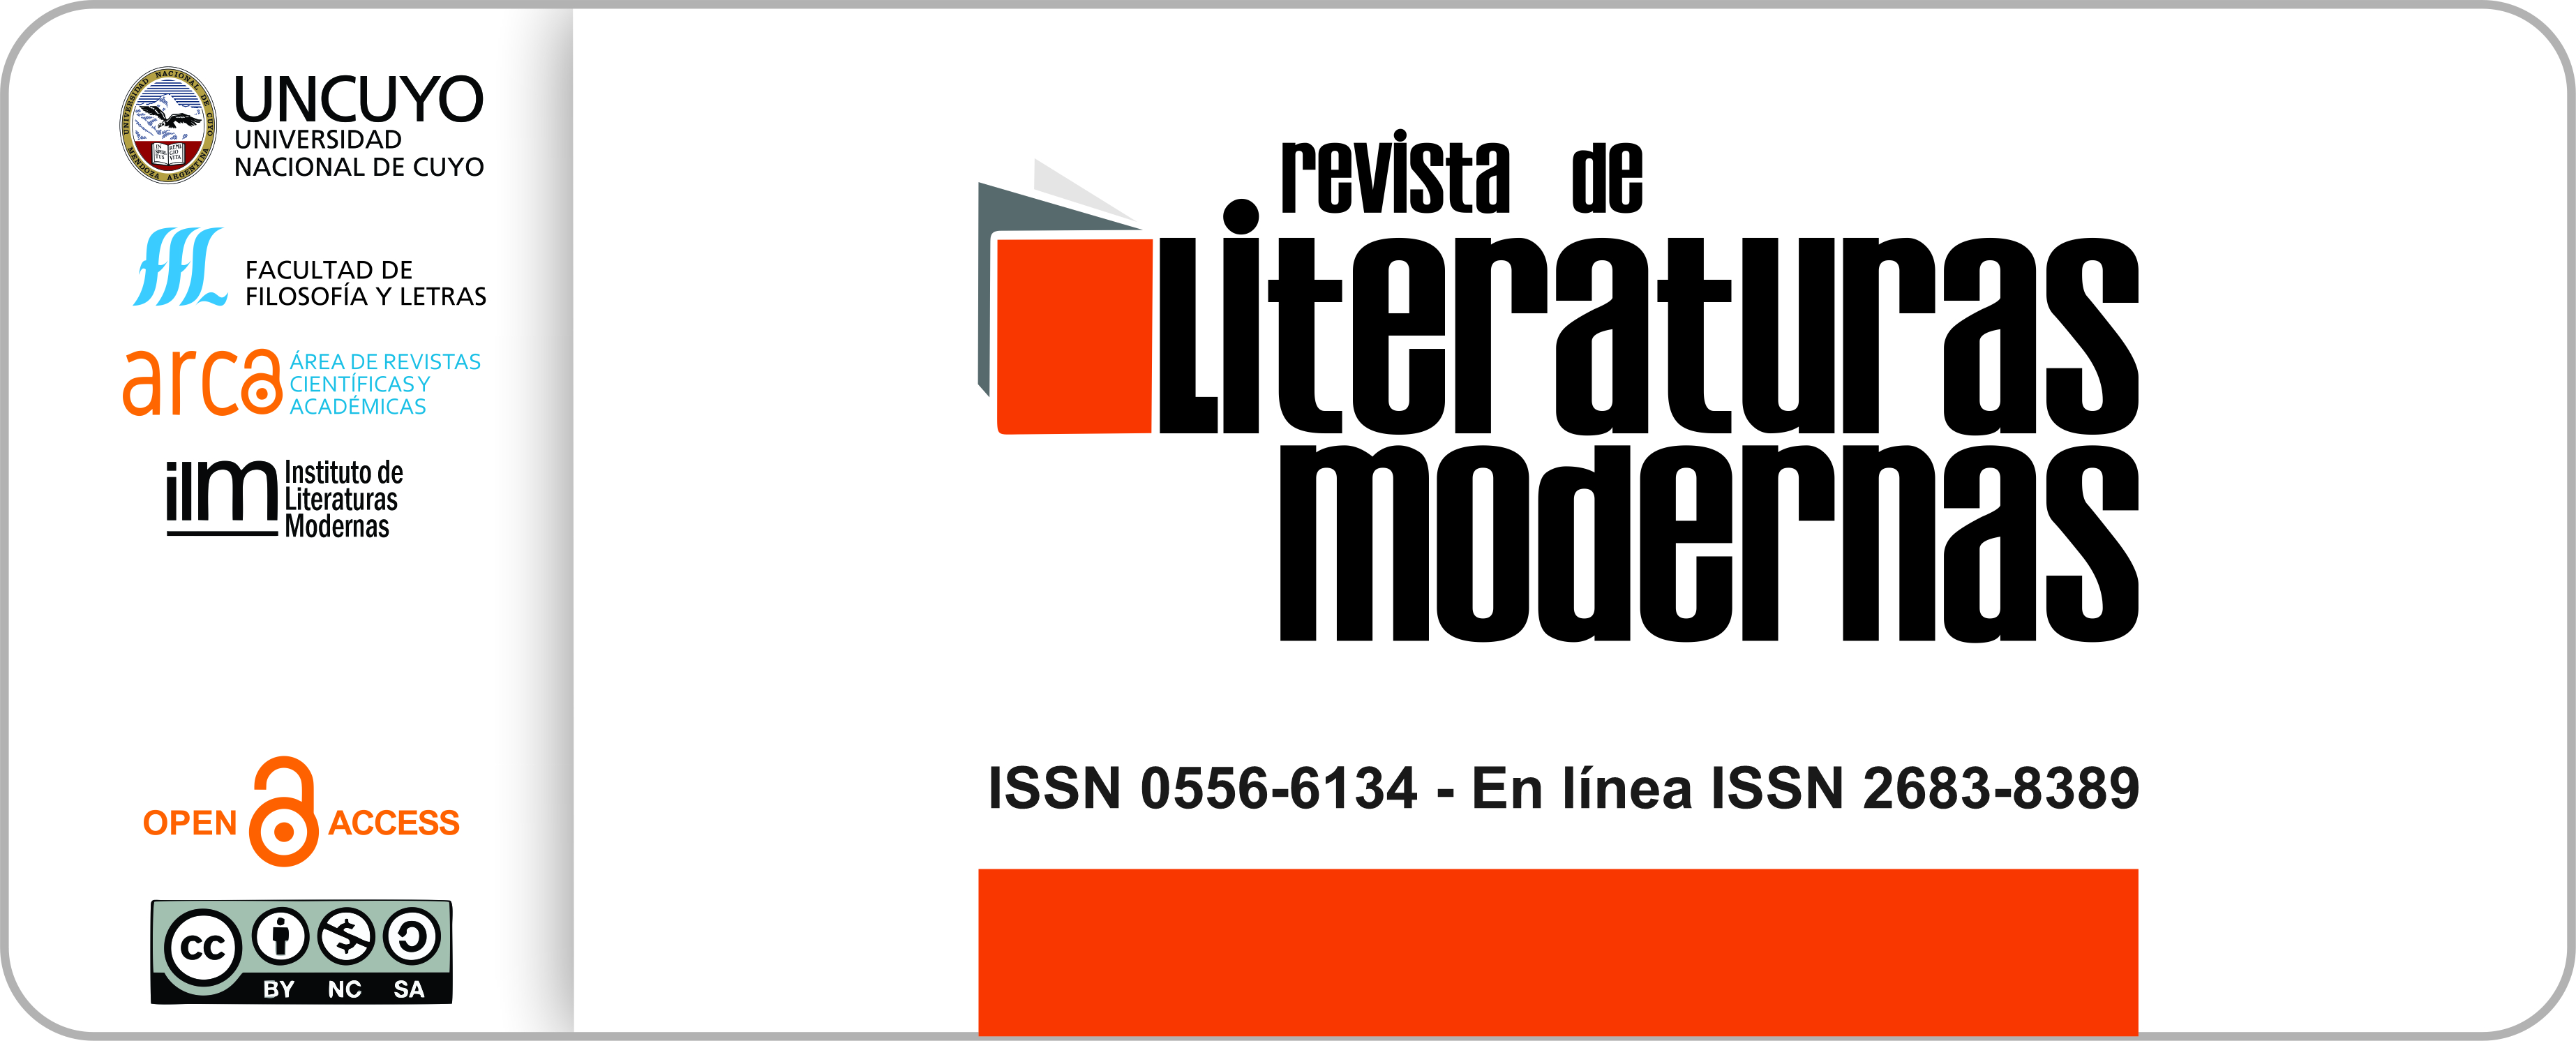 Revista de literaturas modernas